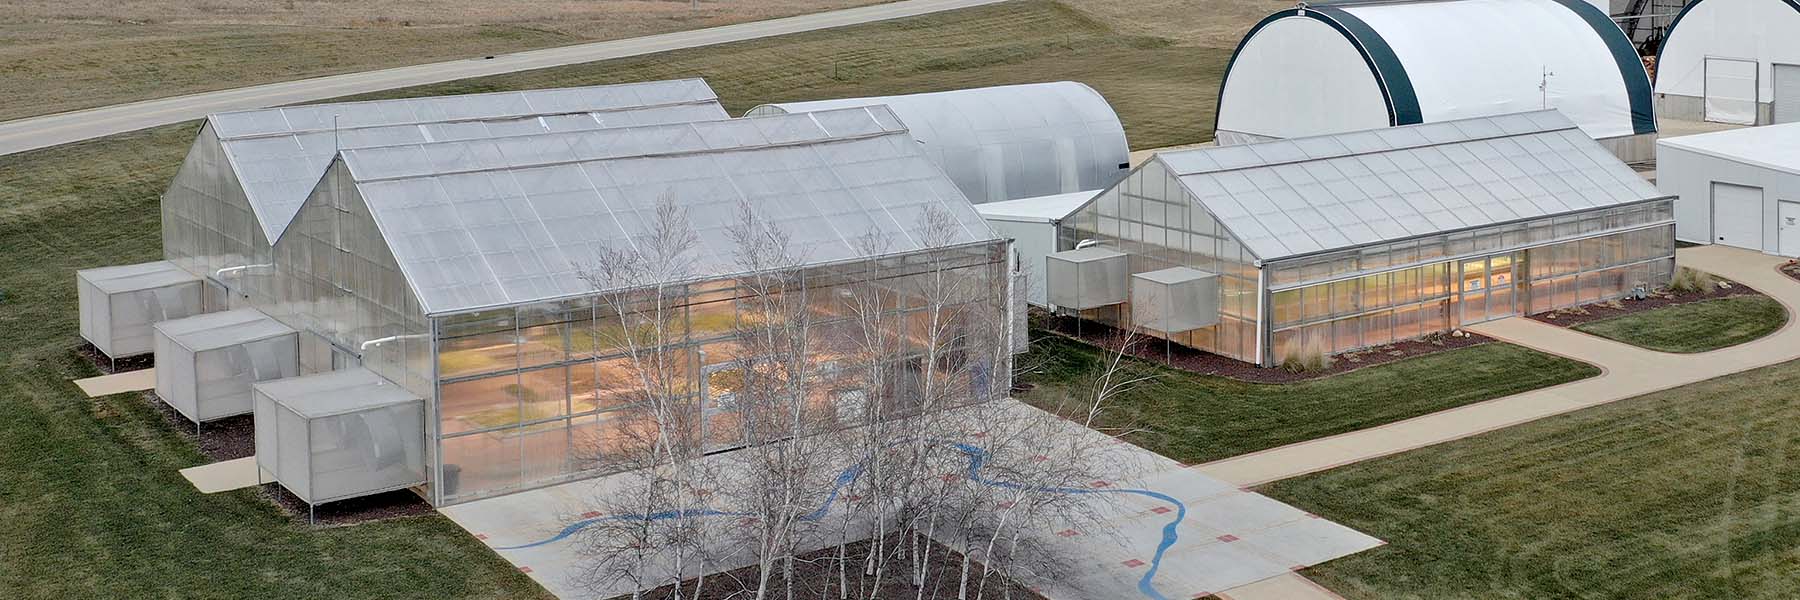 school greenhouse growing